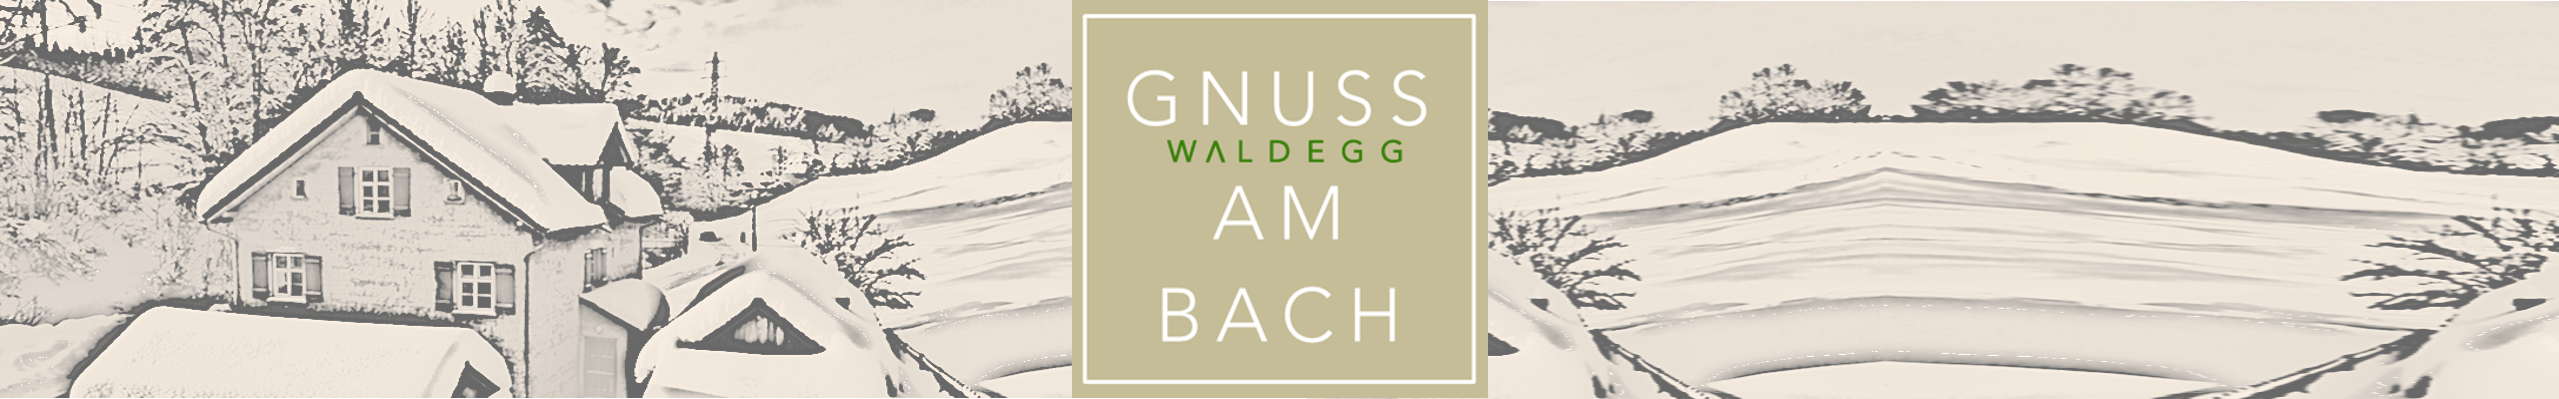 Waldegg am Bach